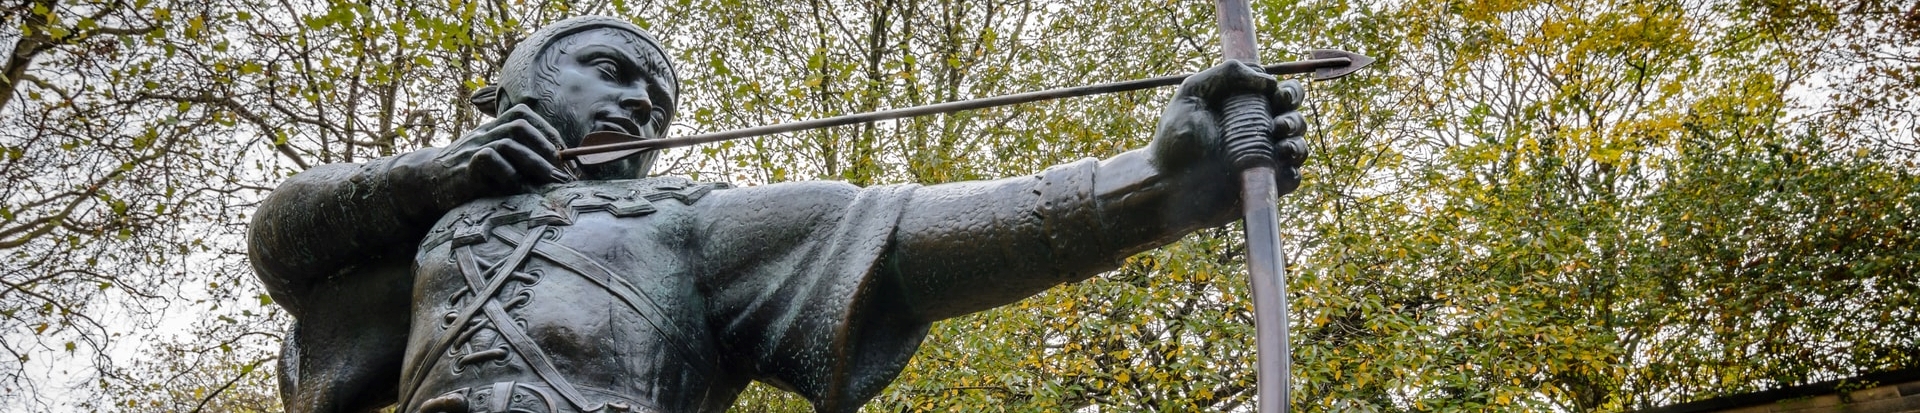 Robin hood statue in Nottingham